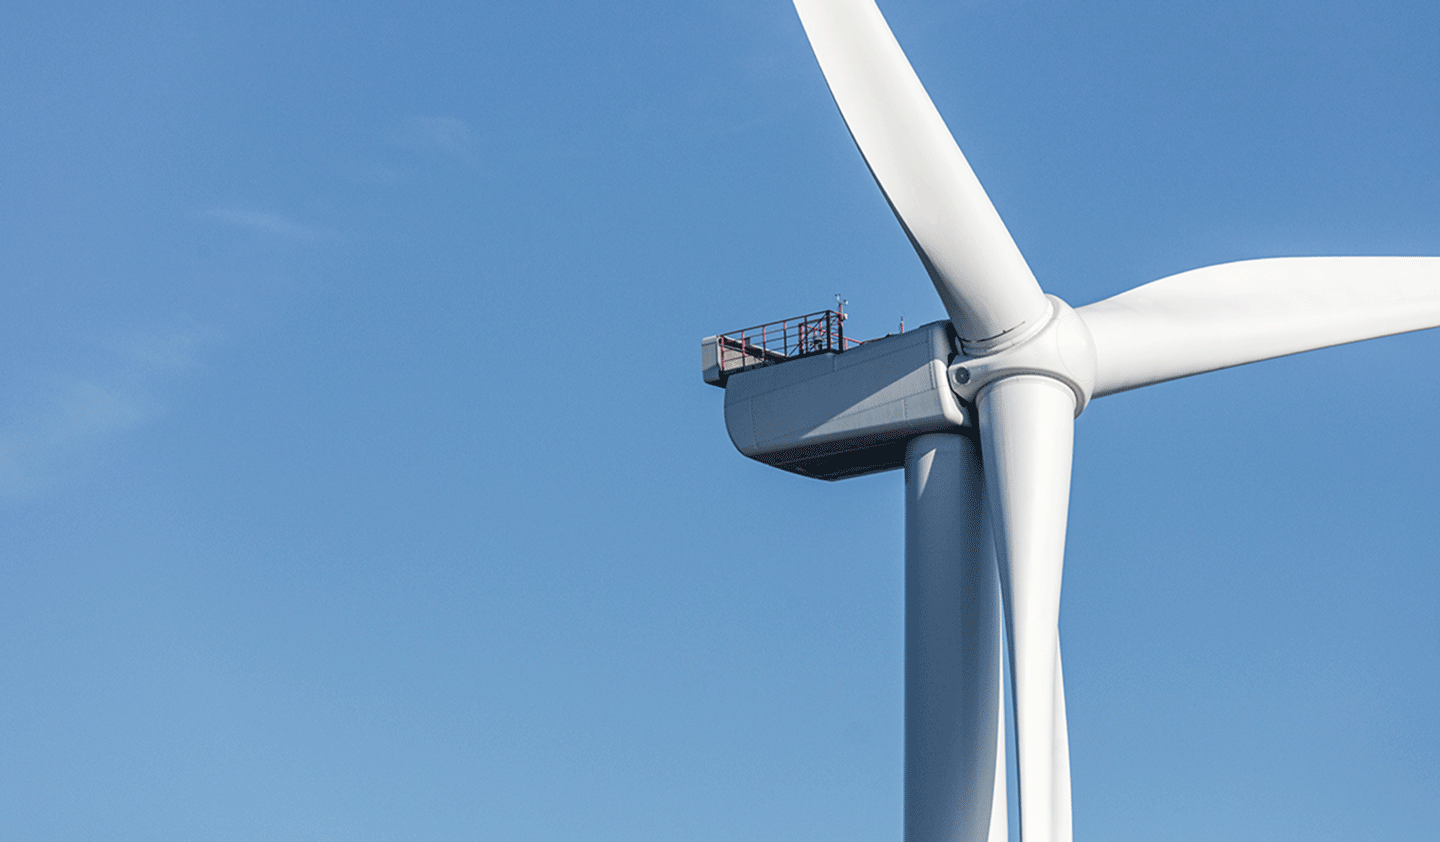 Top of a wind turbine